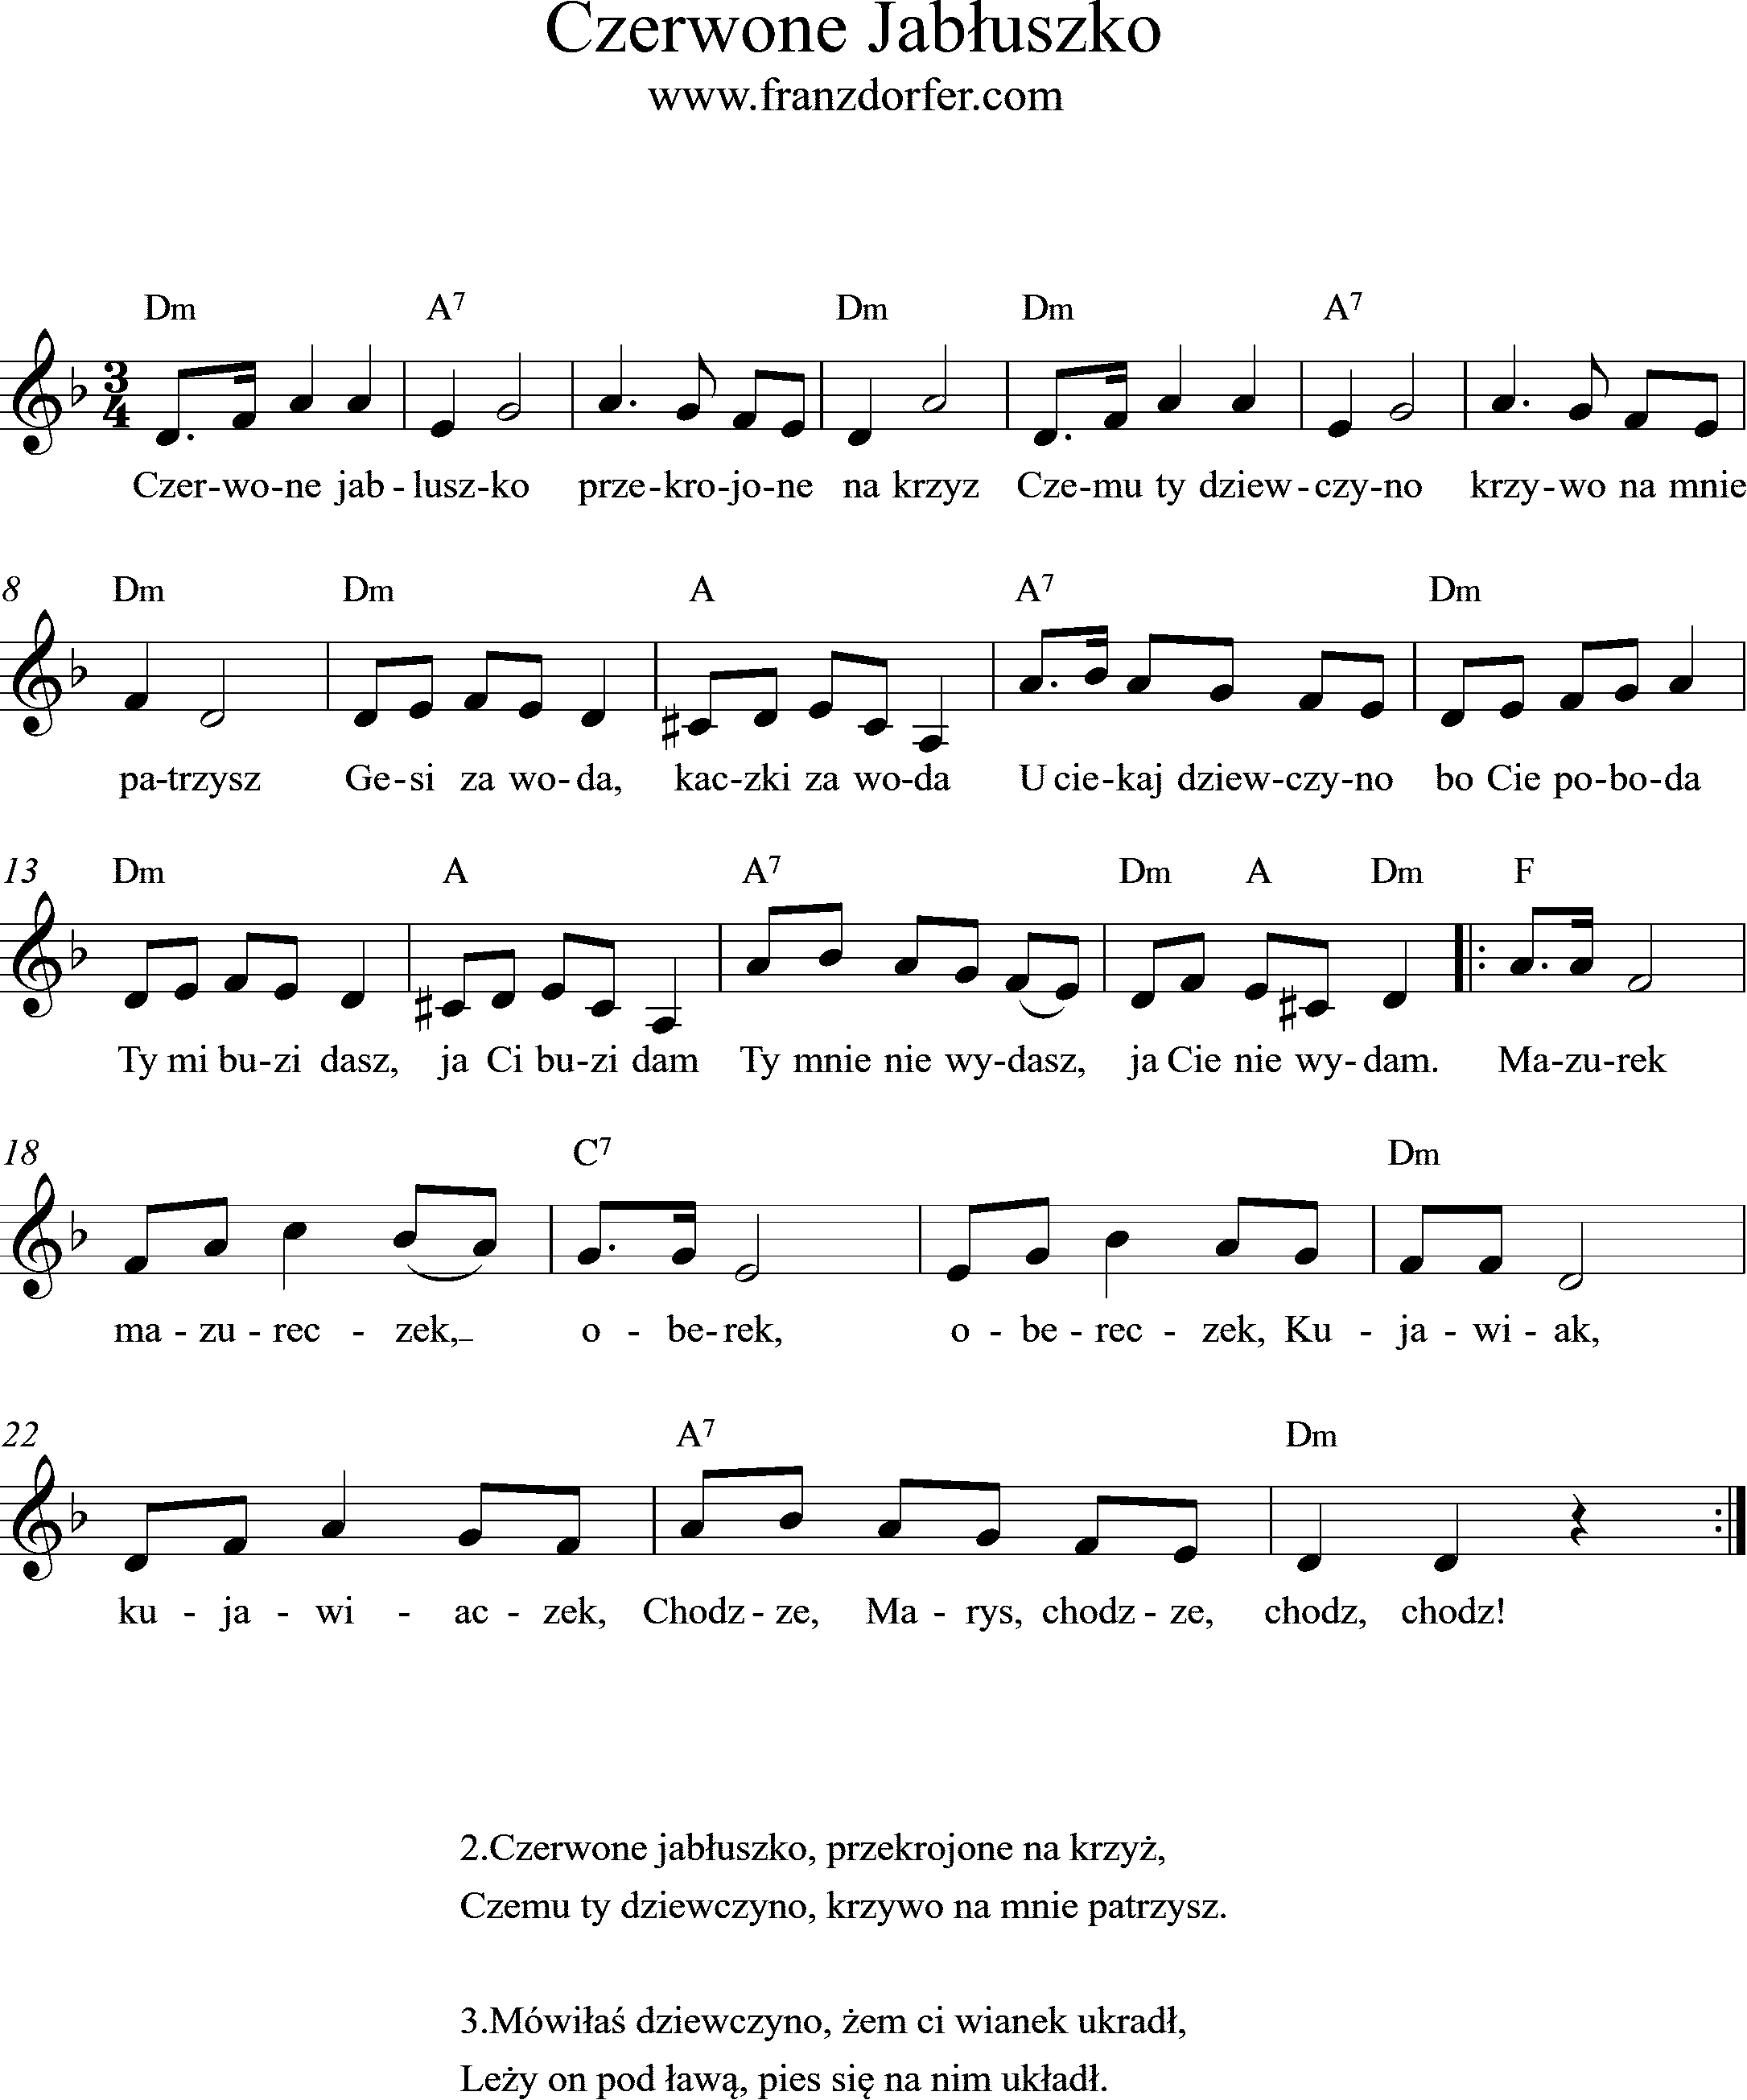 sheetmusic, d-minor, Czerwone Jabkuszko